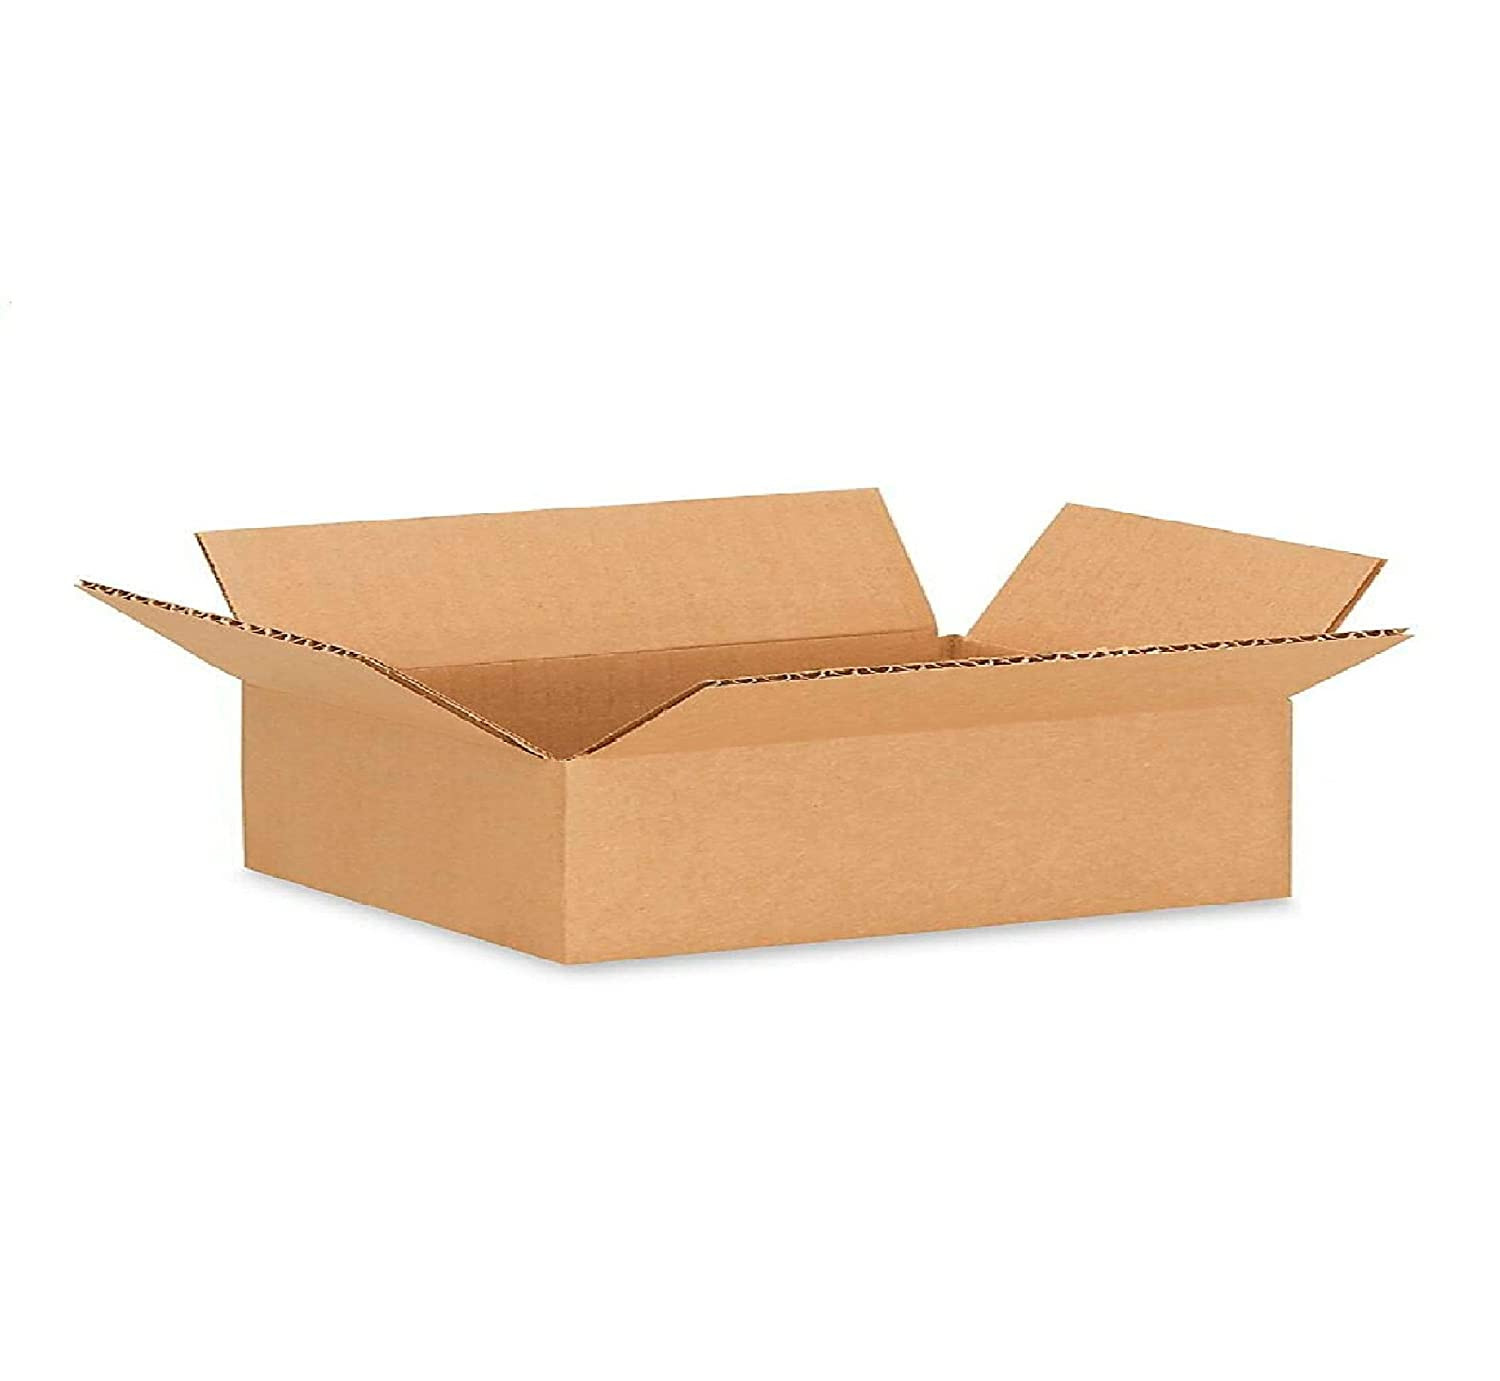 3 Layers carton box 60x40x40